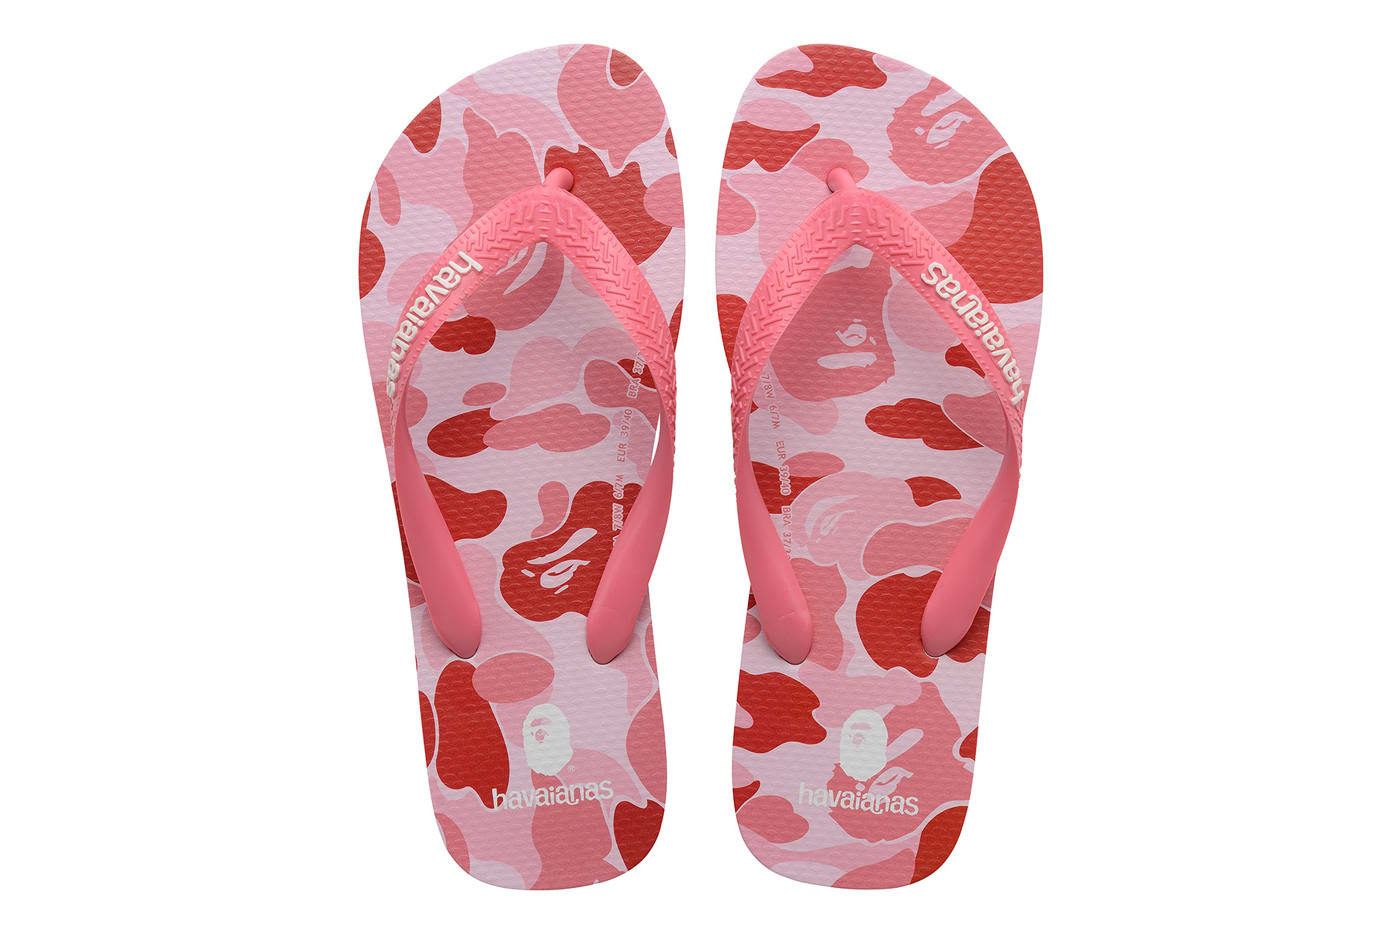 BAPE x Havaianas flip-flops